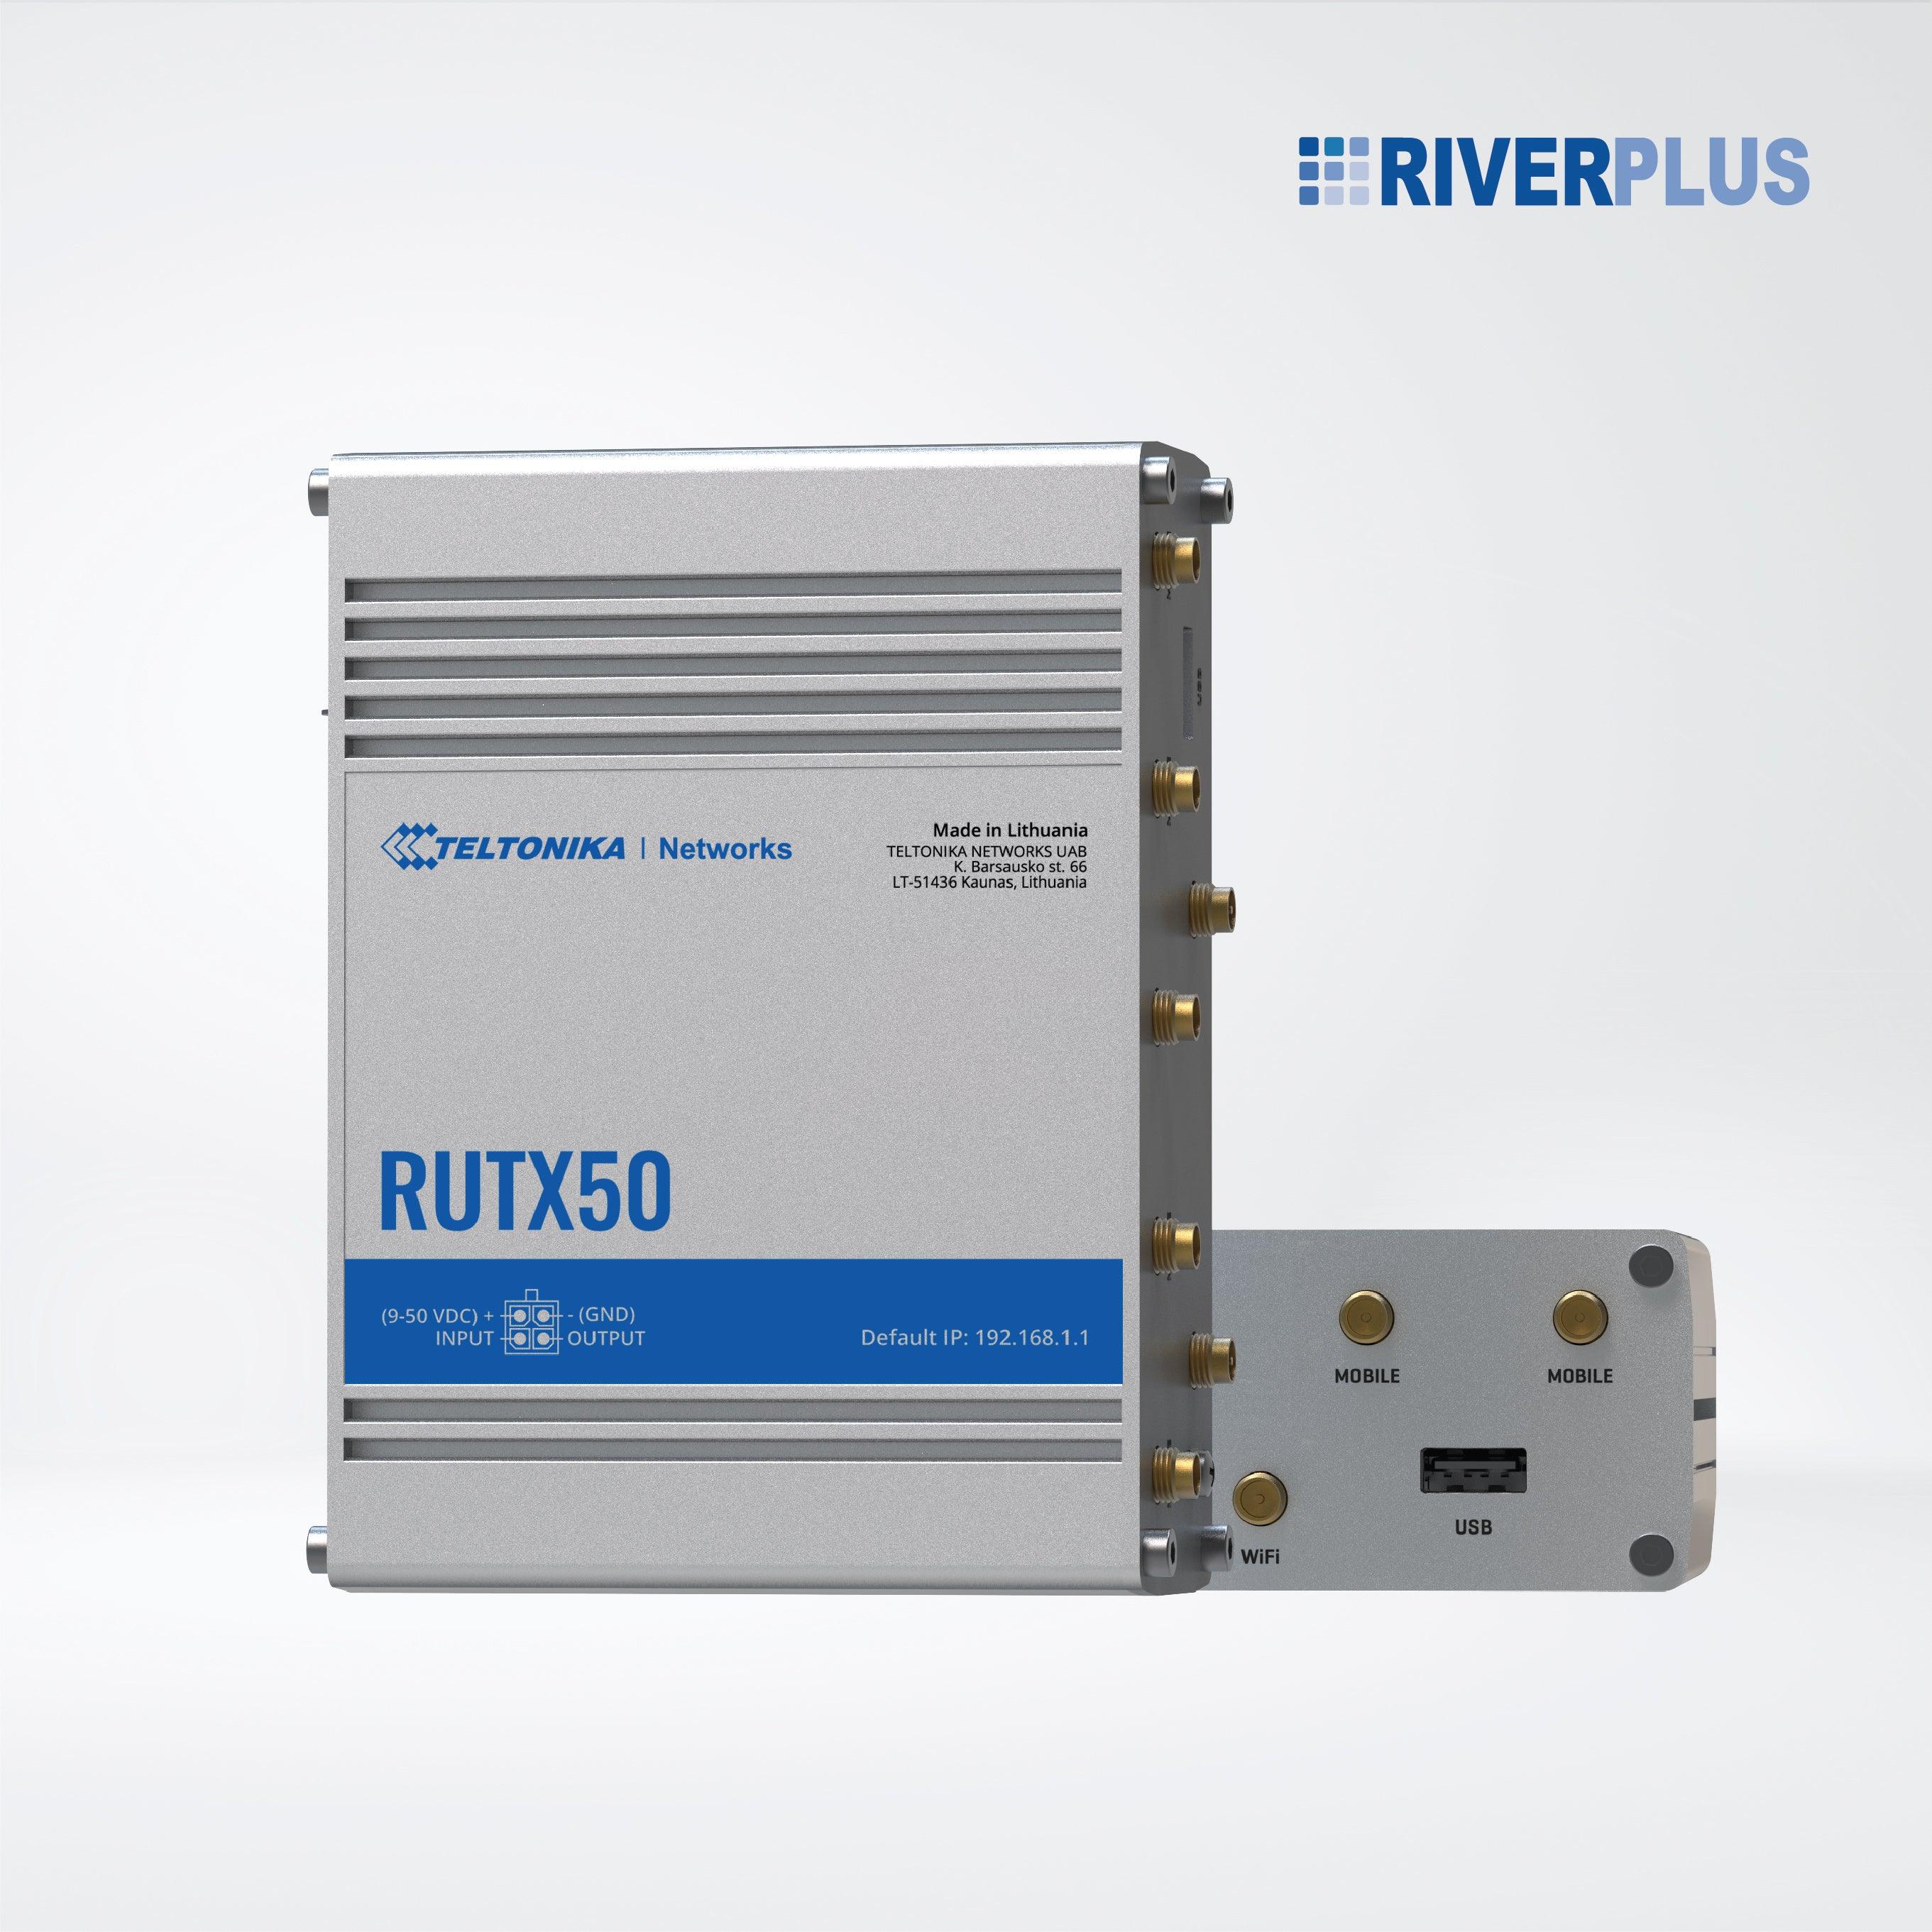 RUTX50 Industrial 5G Router - Riverplus